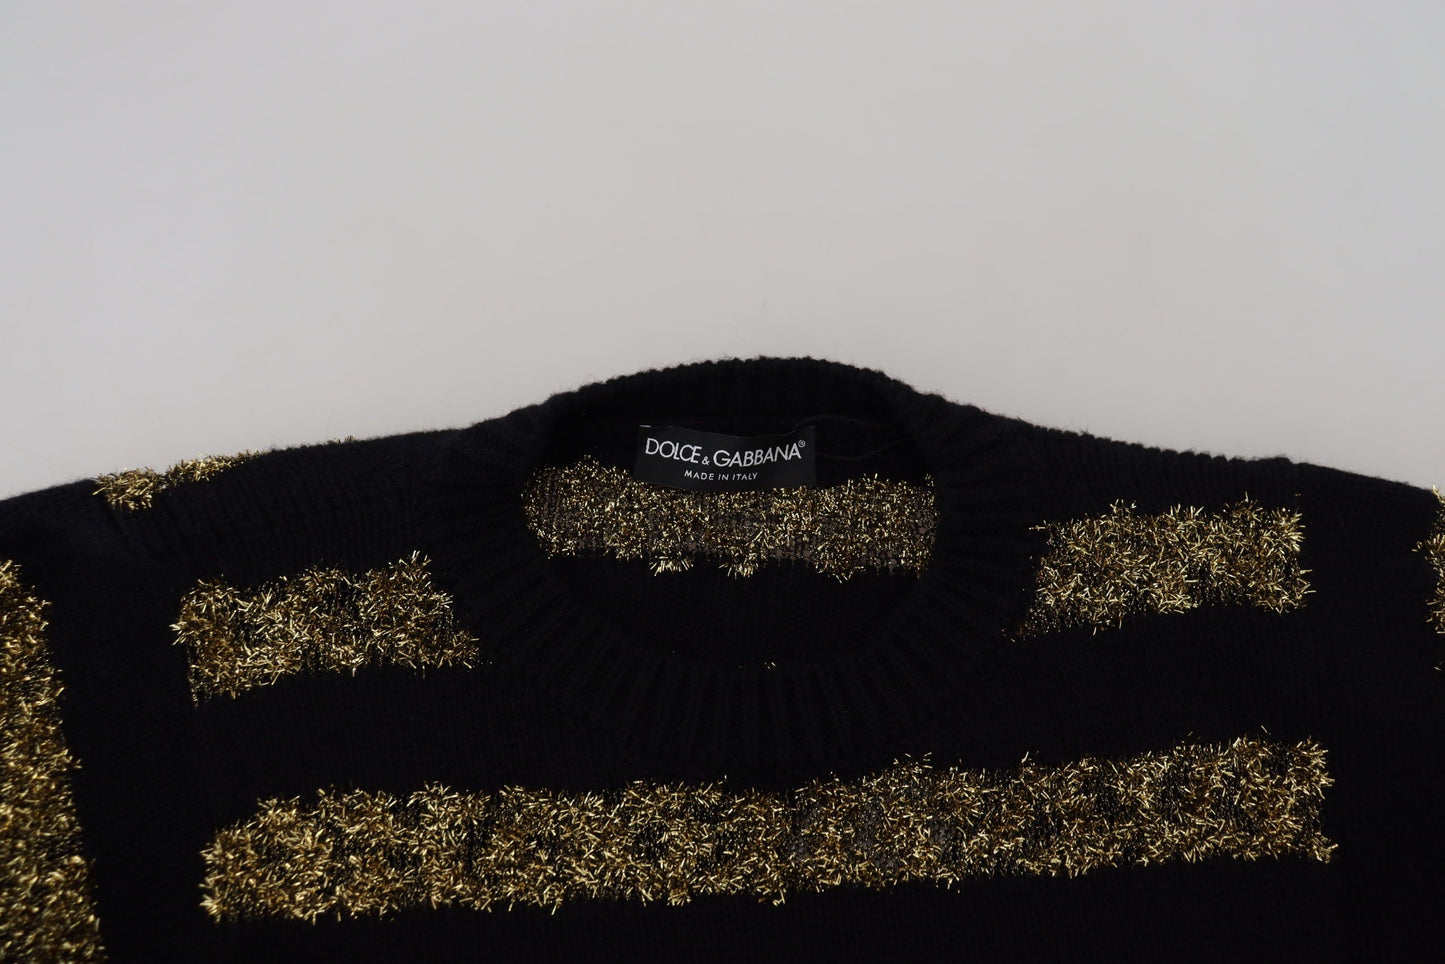 Elegant Black and Gold Crystal Sweater